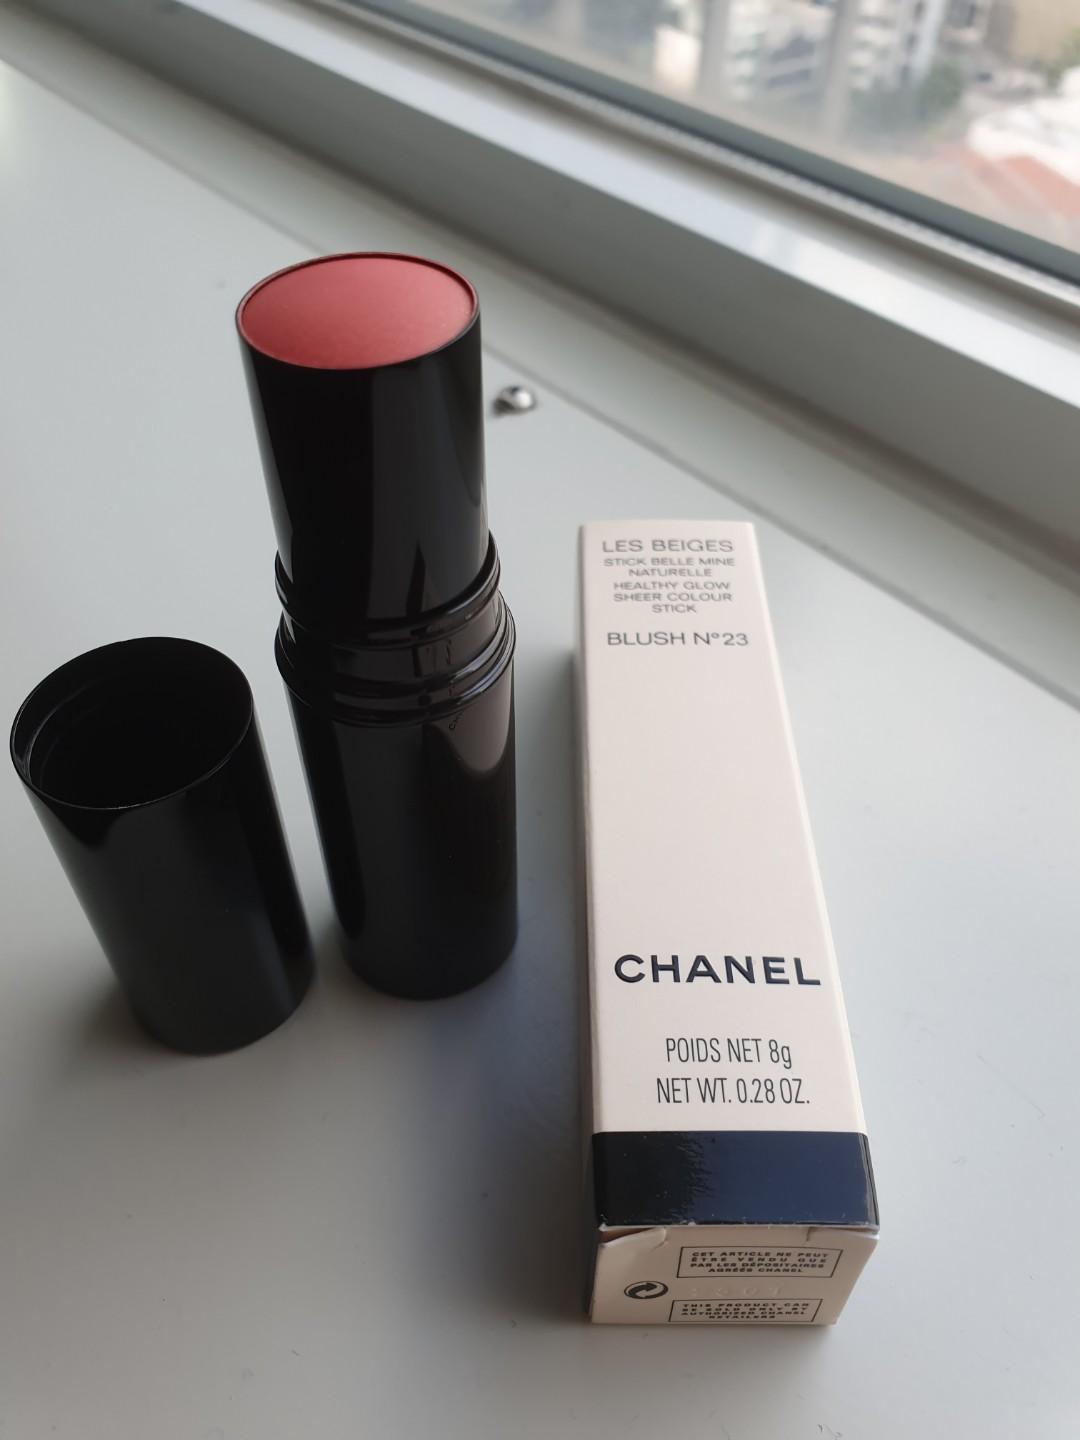 Chanel Les Beiges Healthy Glow Sheer Colour Stick Blush No20